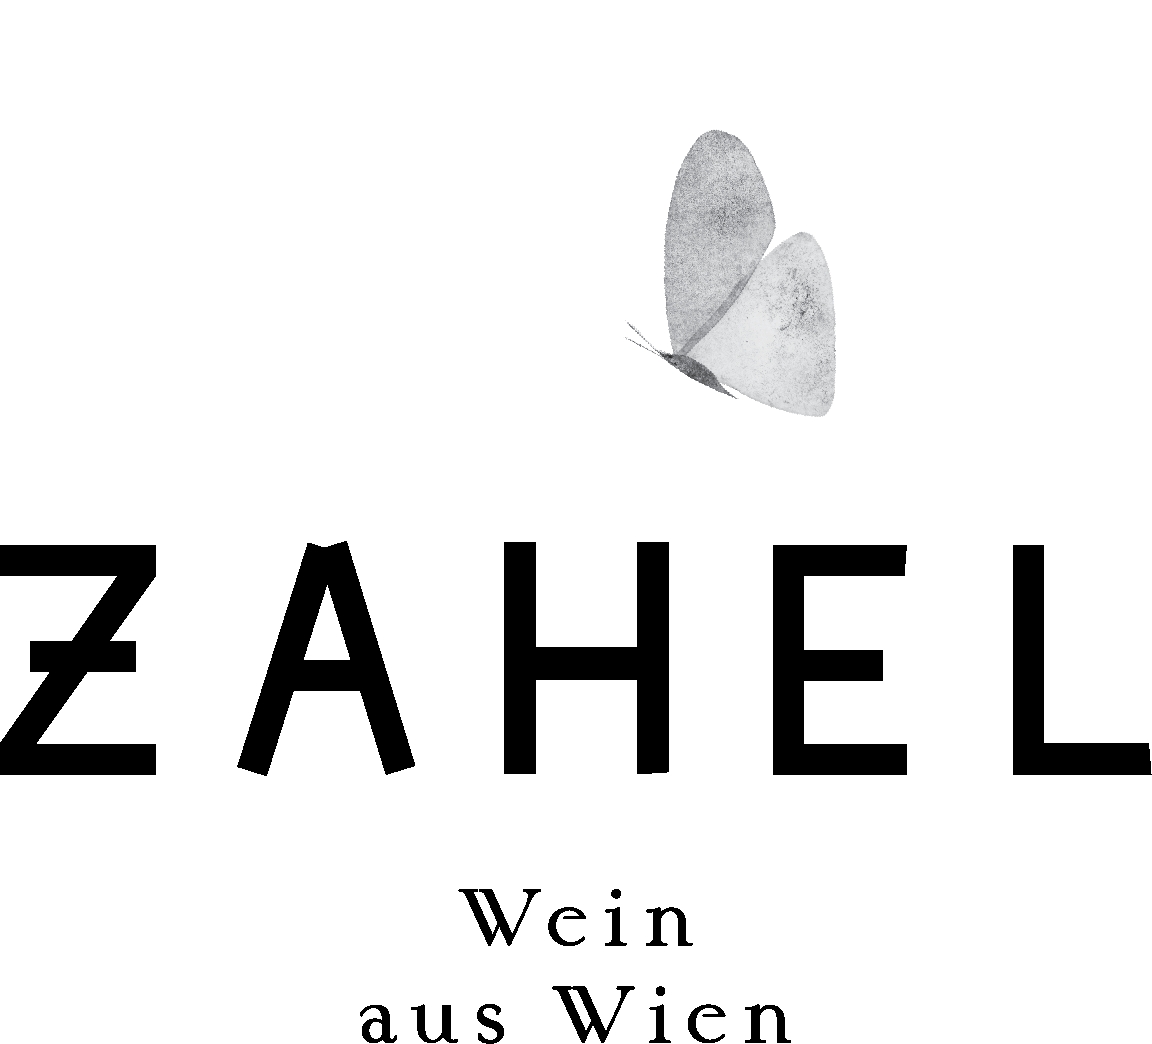 Bio Weingut Zahel GmbH